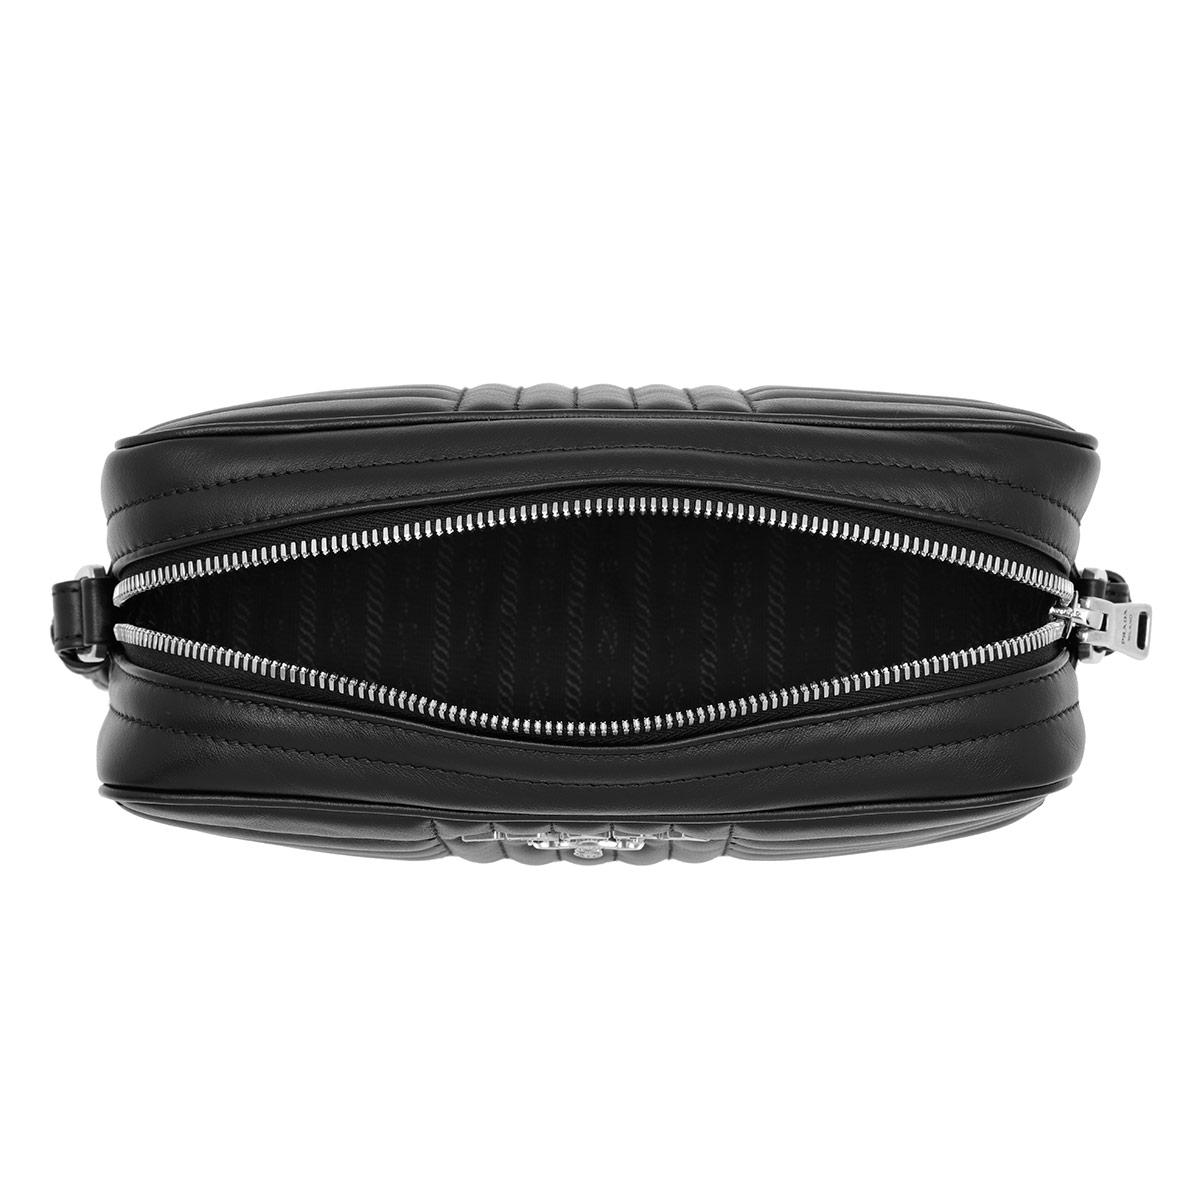 Prada Black quilted leather camera bag